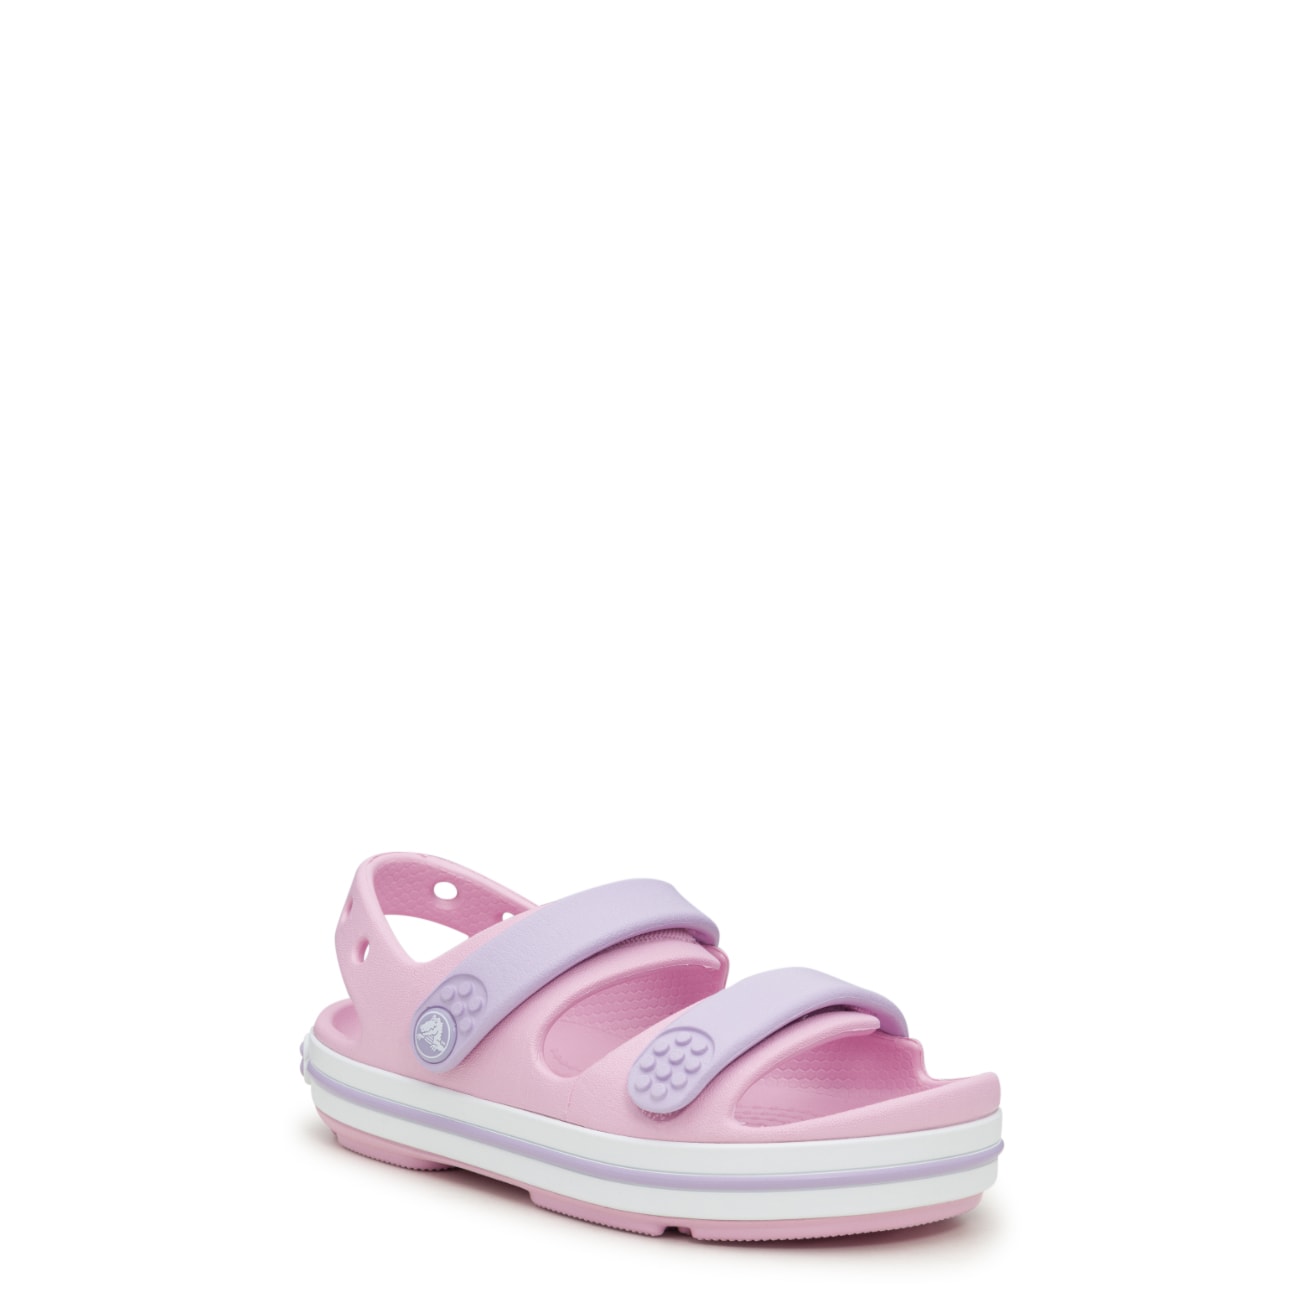 Toddler Girls' Crocband Cruiser Sandal